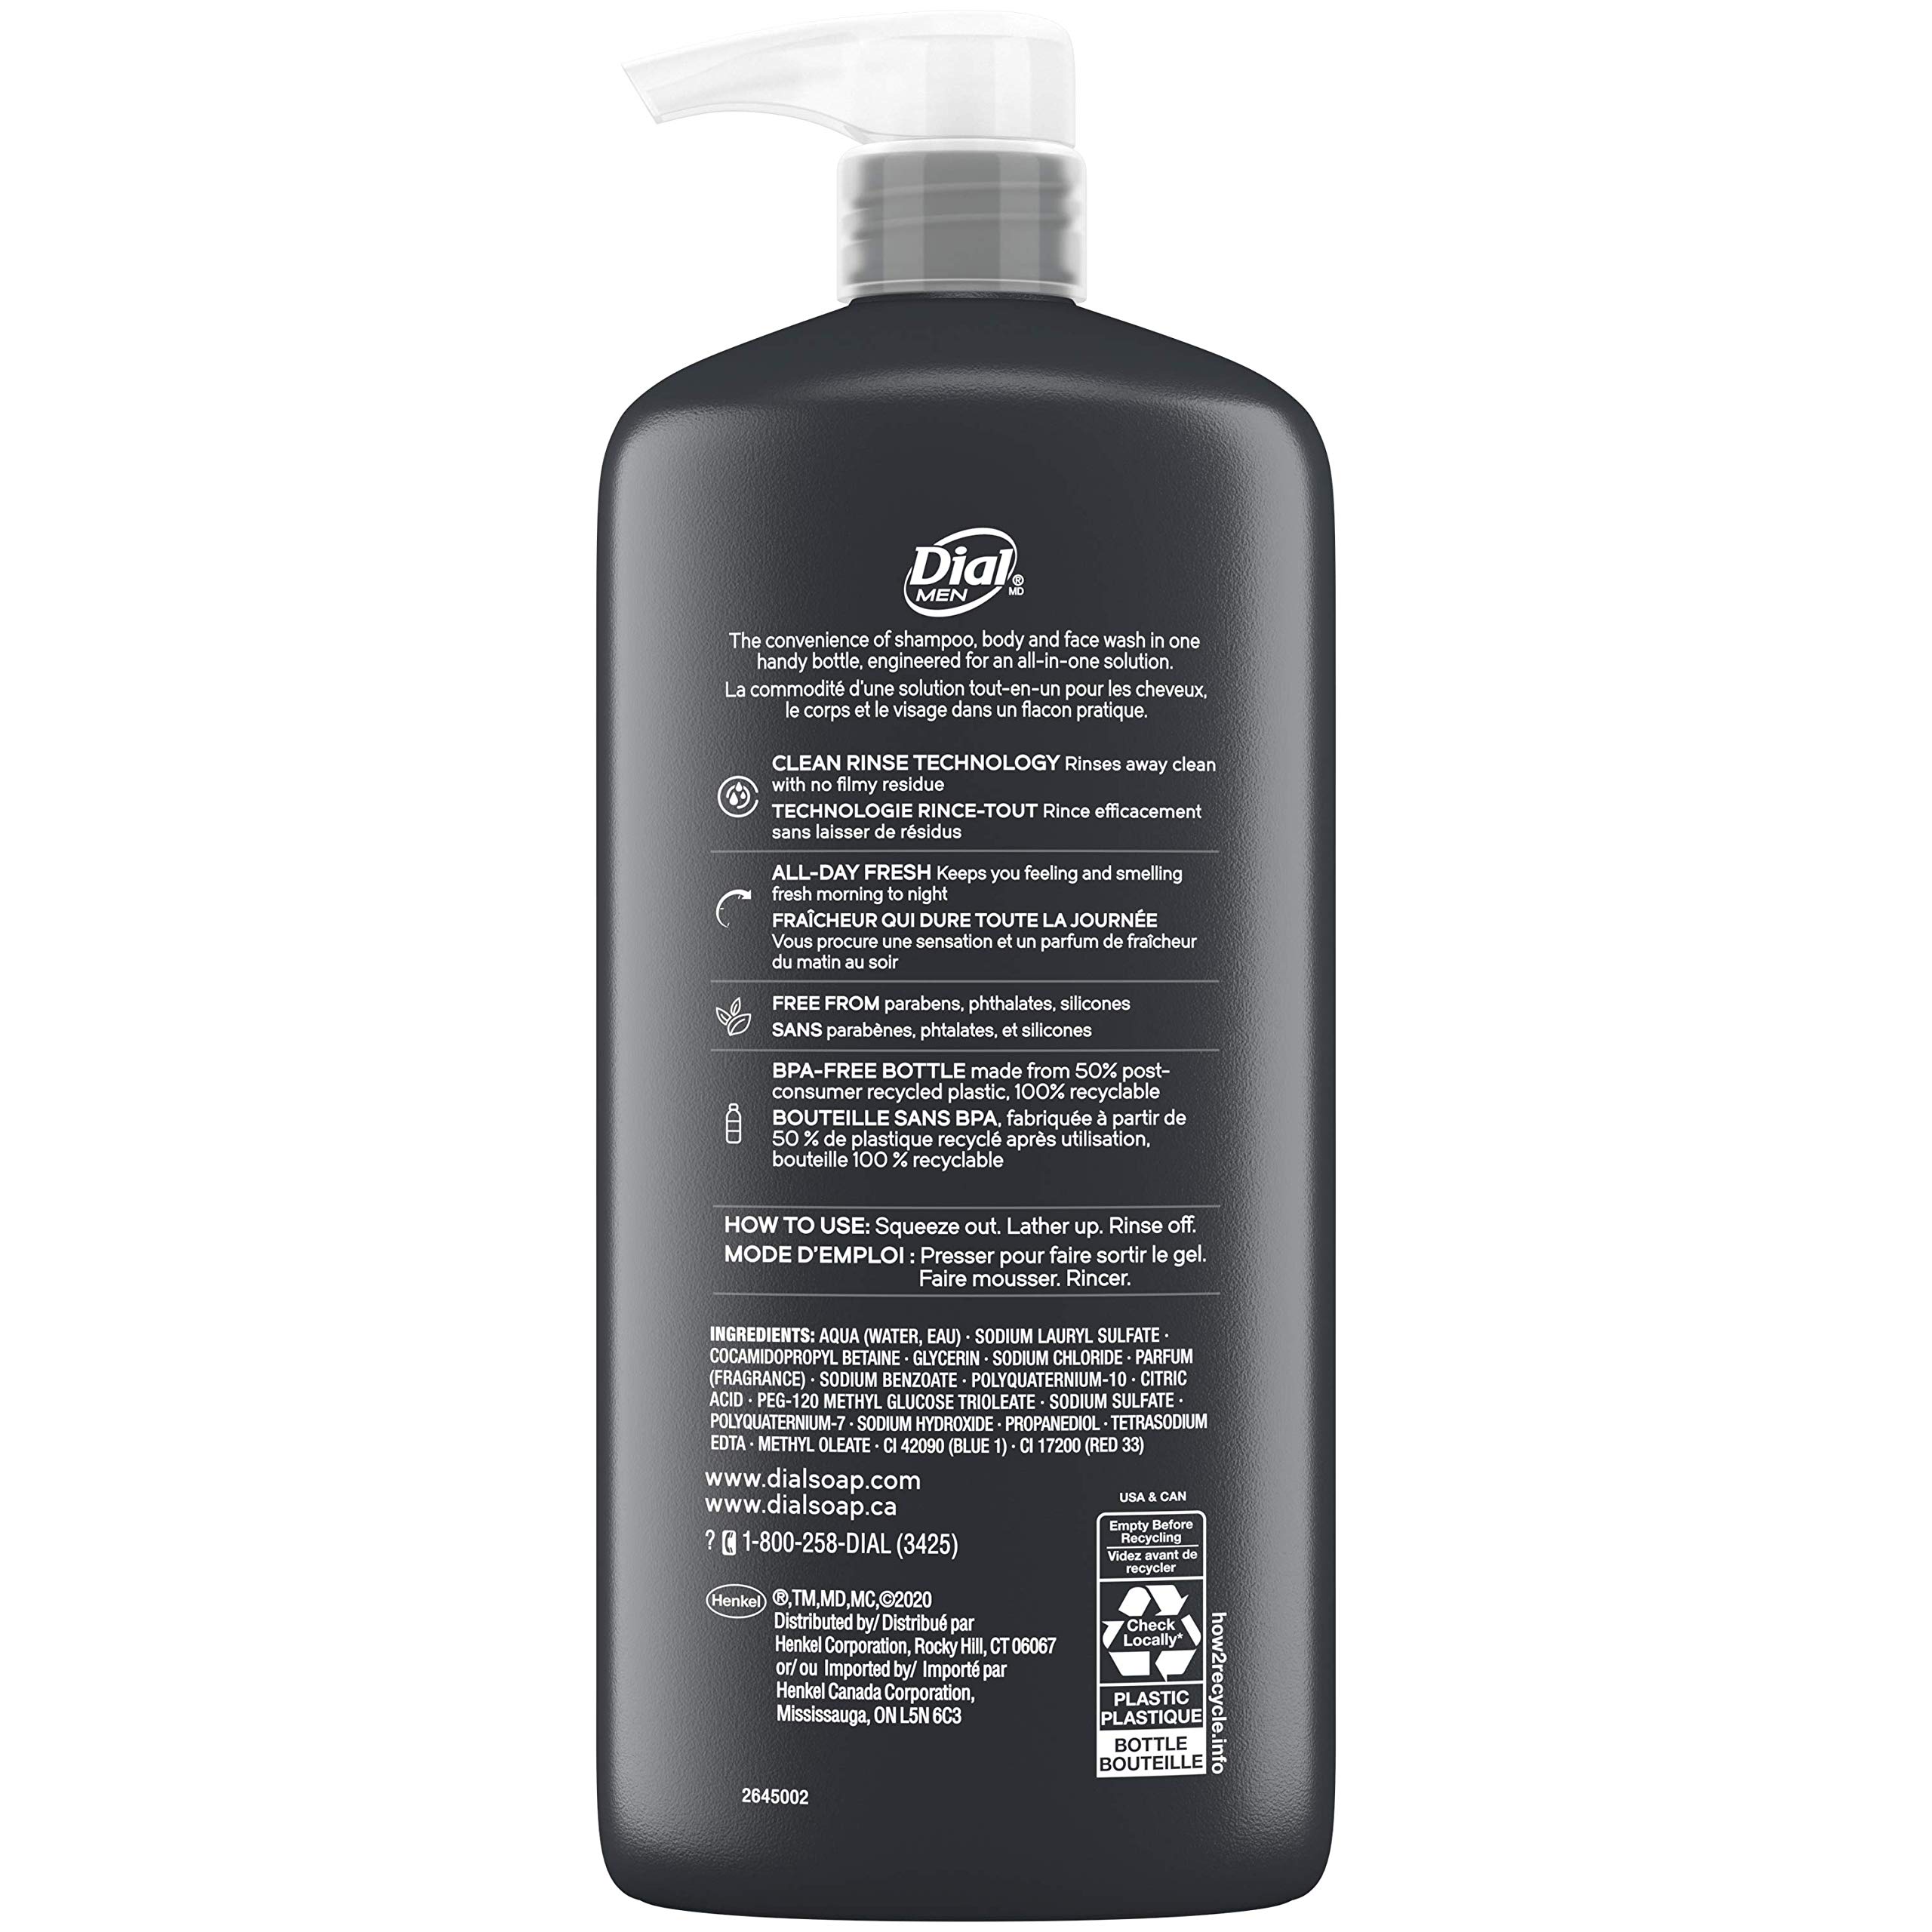 Dial Men 3in1 Body, Hair and Face Wash, Ultimate Clean, 69 fl oz (3-23 fl oz Bottles)